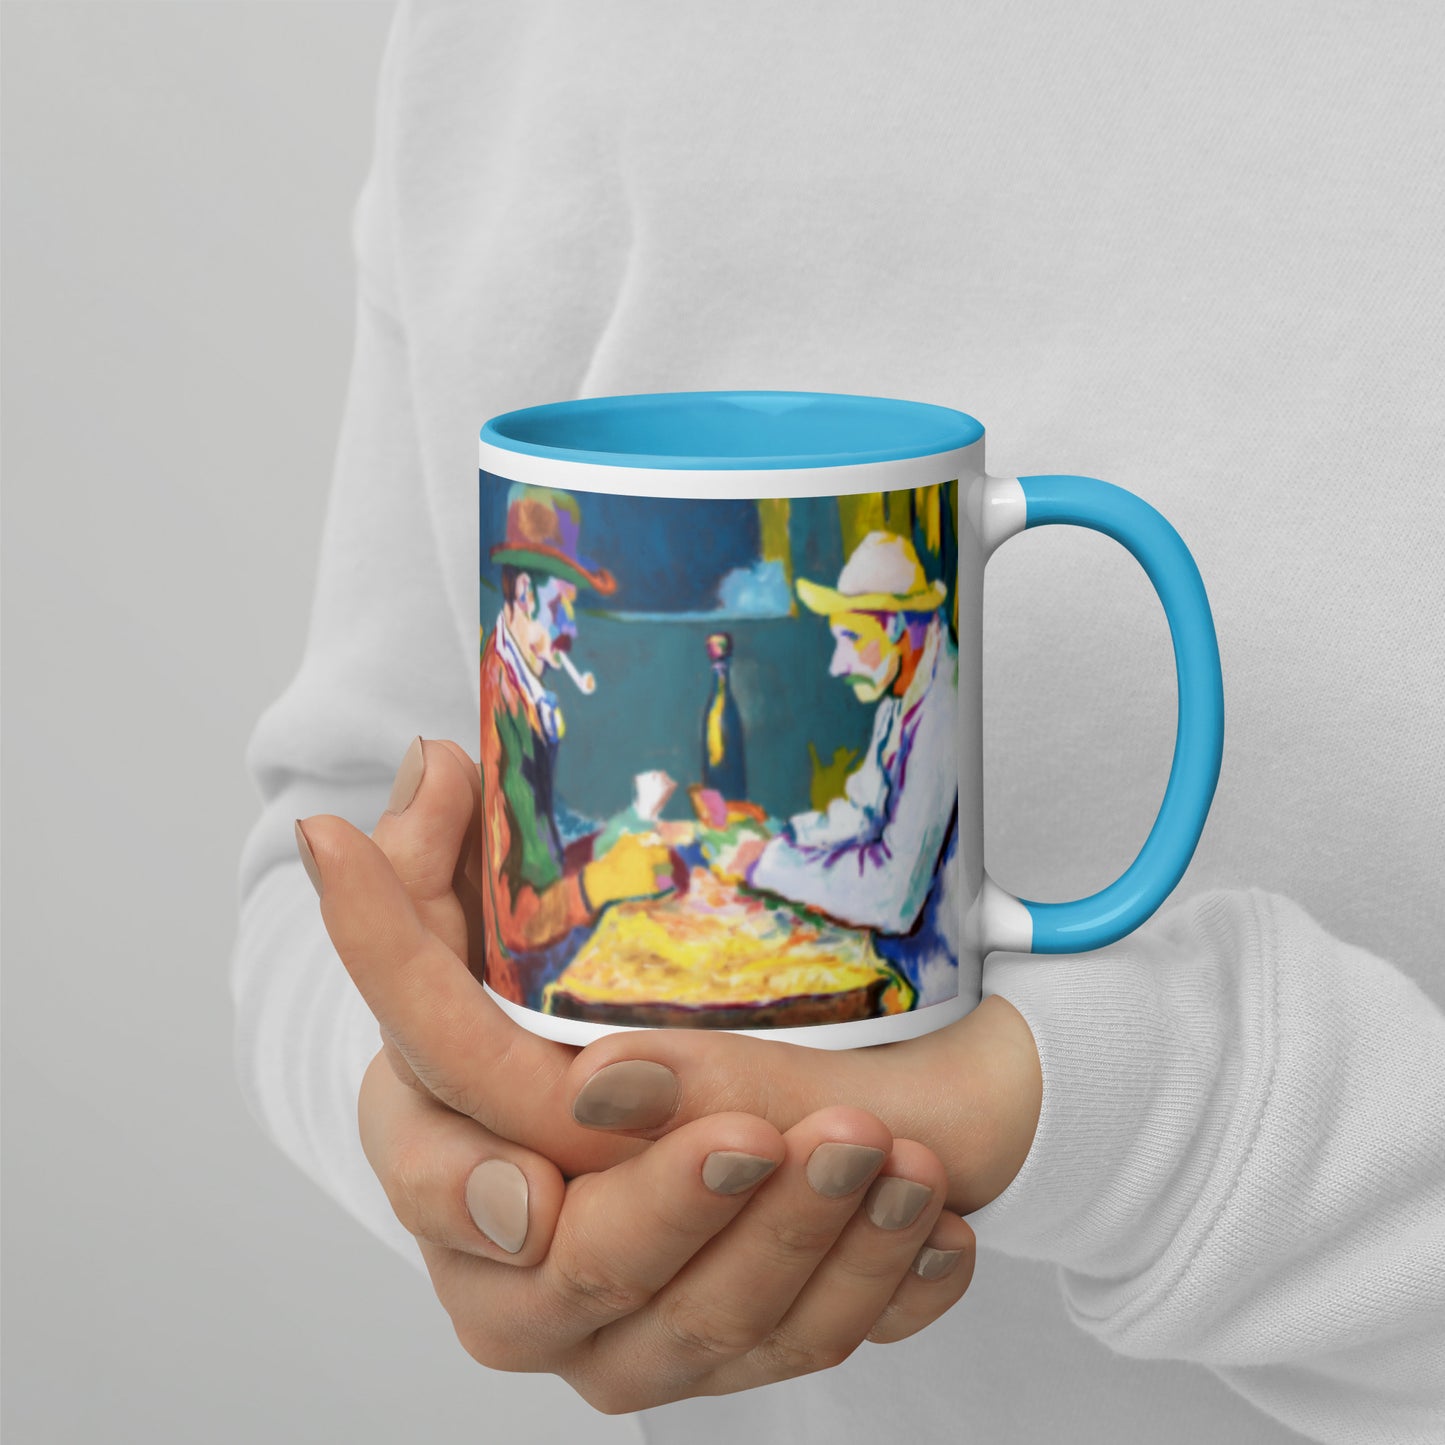 Card Players Mug with Color Inside